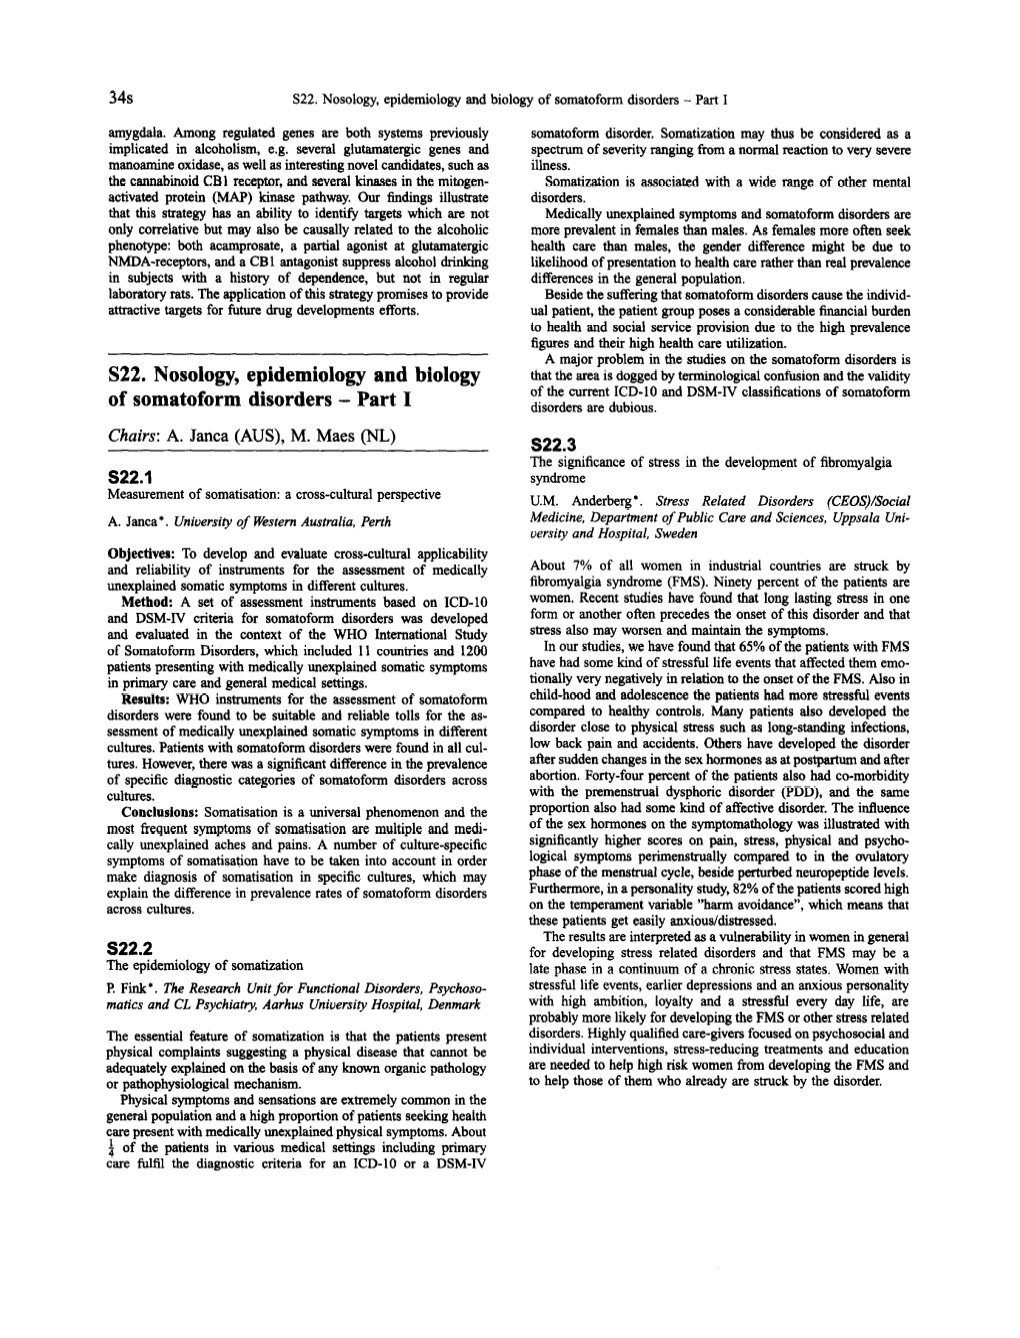 S22. Nosology, Epidemiology and Biology of Somatoform Disorders - Part I